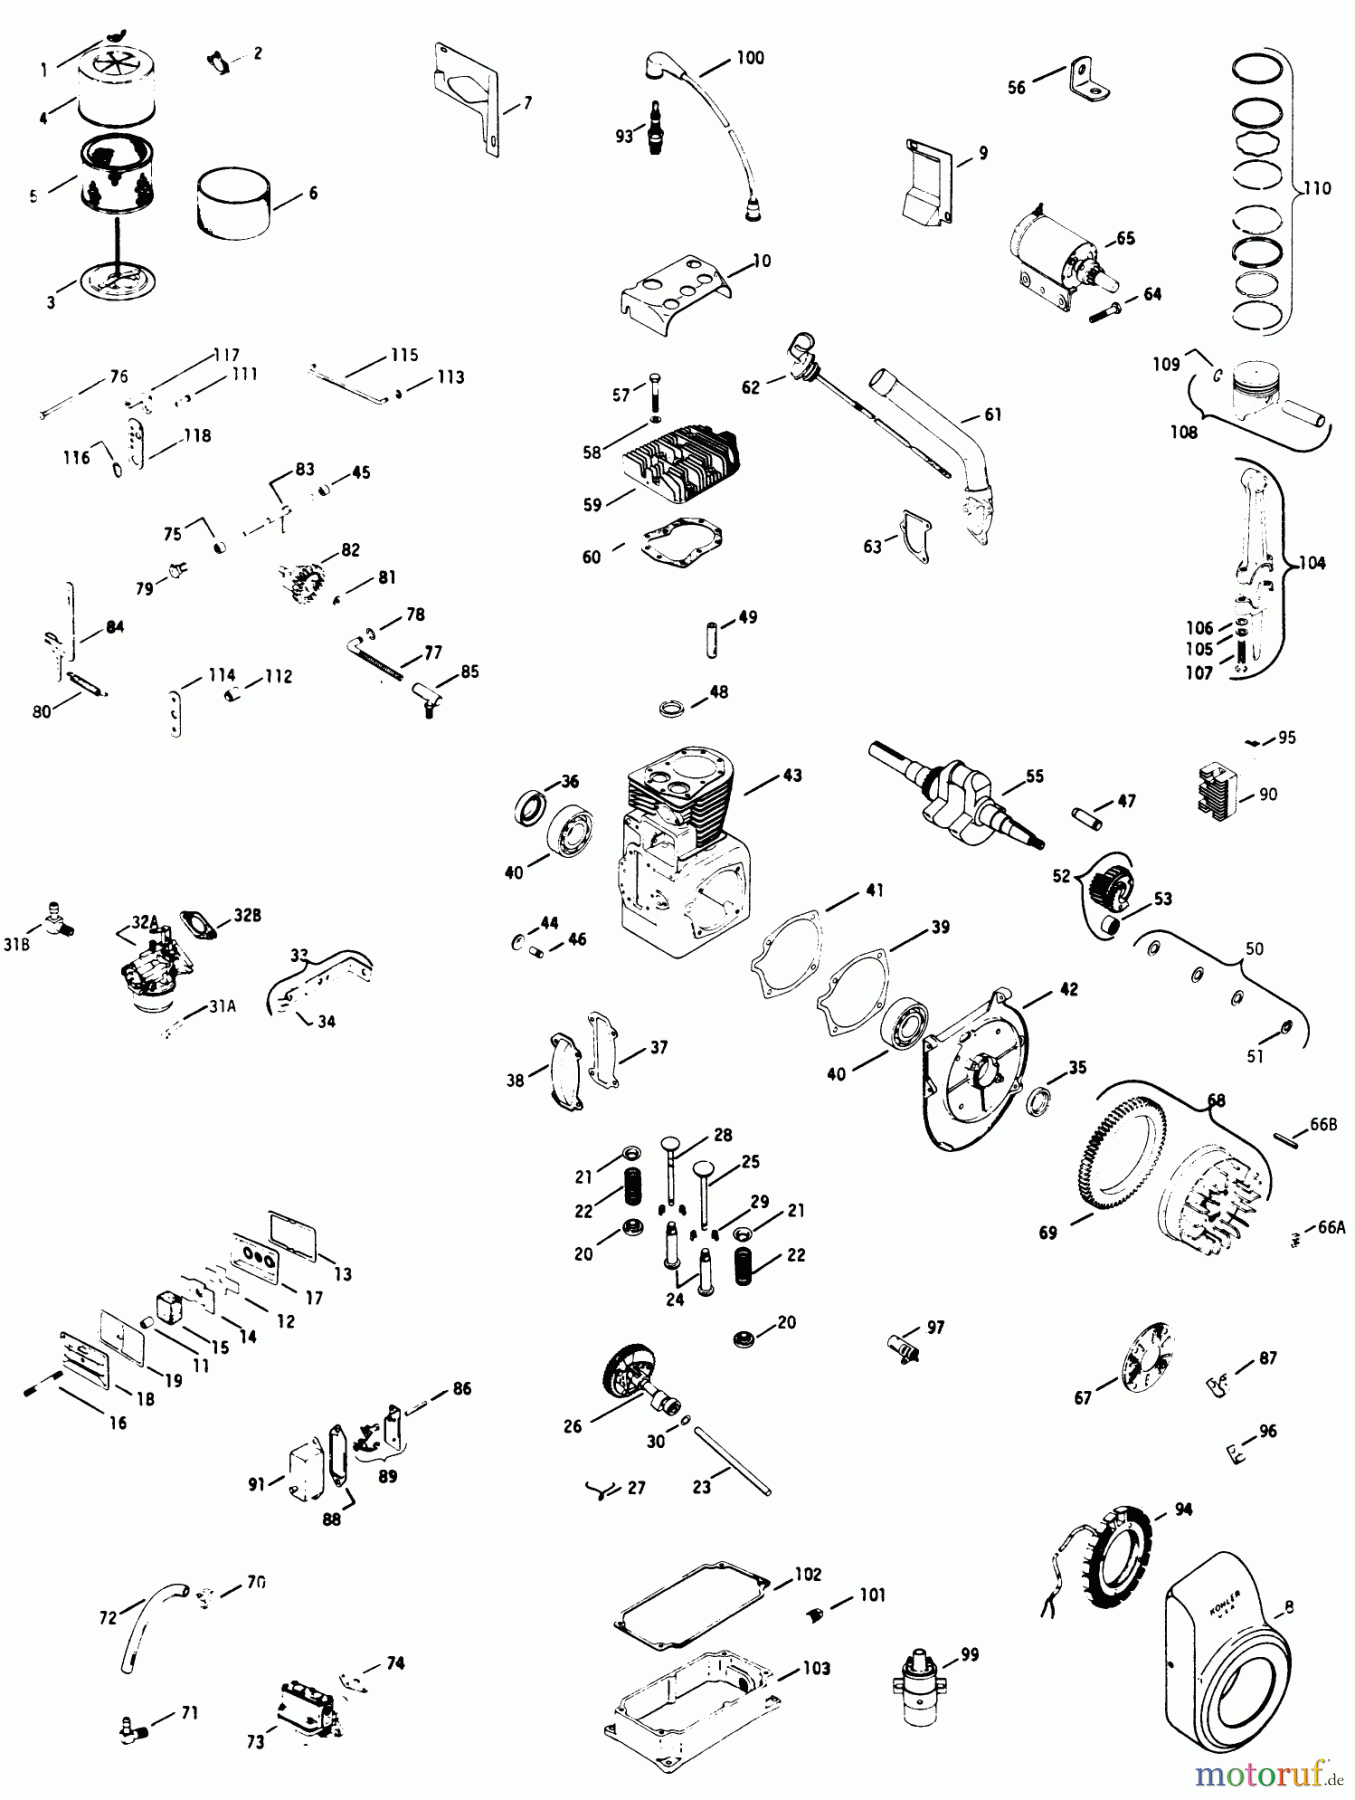  Toro Neu Mowers, Lawn & Garden Tractor Seite 1 71-12KS02 (C-120) - Toro C-120 Automatic Tractor, 1977 16 H.P. ENGINE K341S, SPEC 71128A